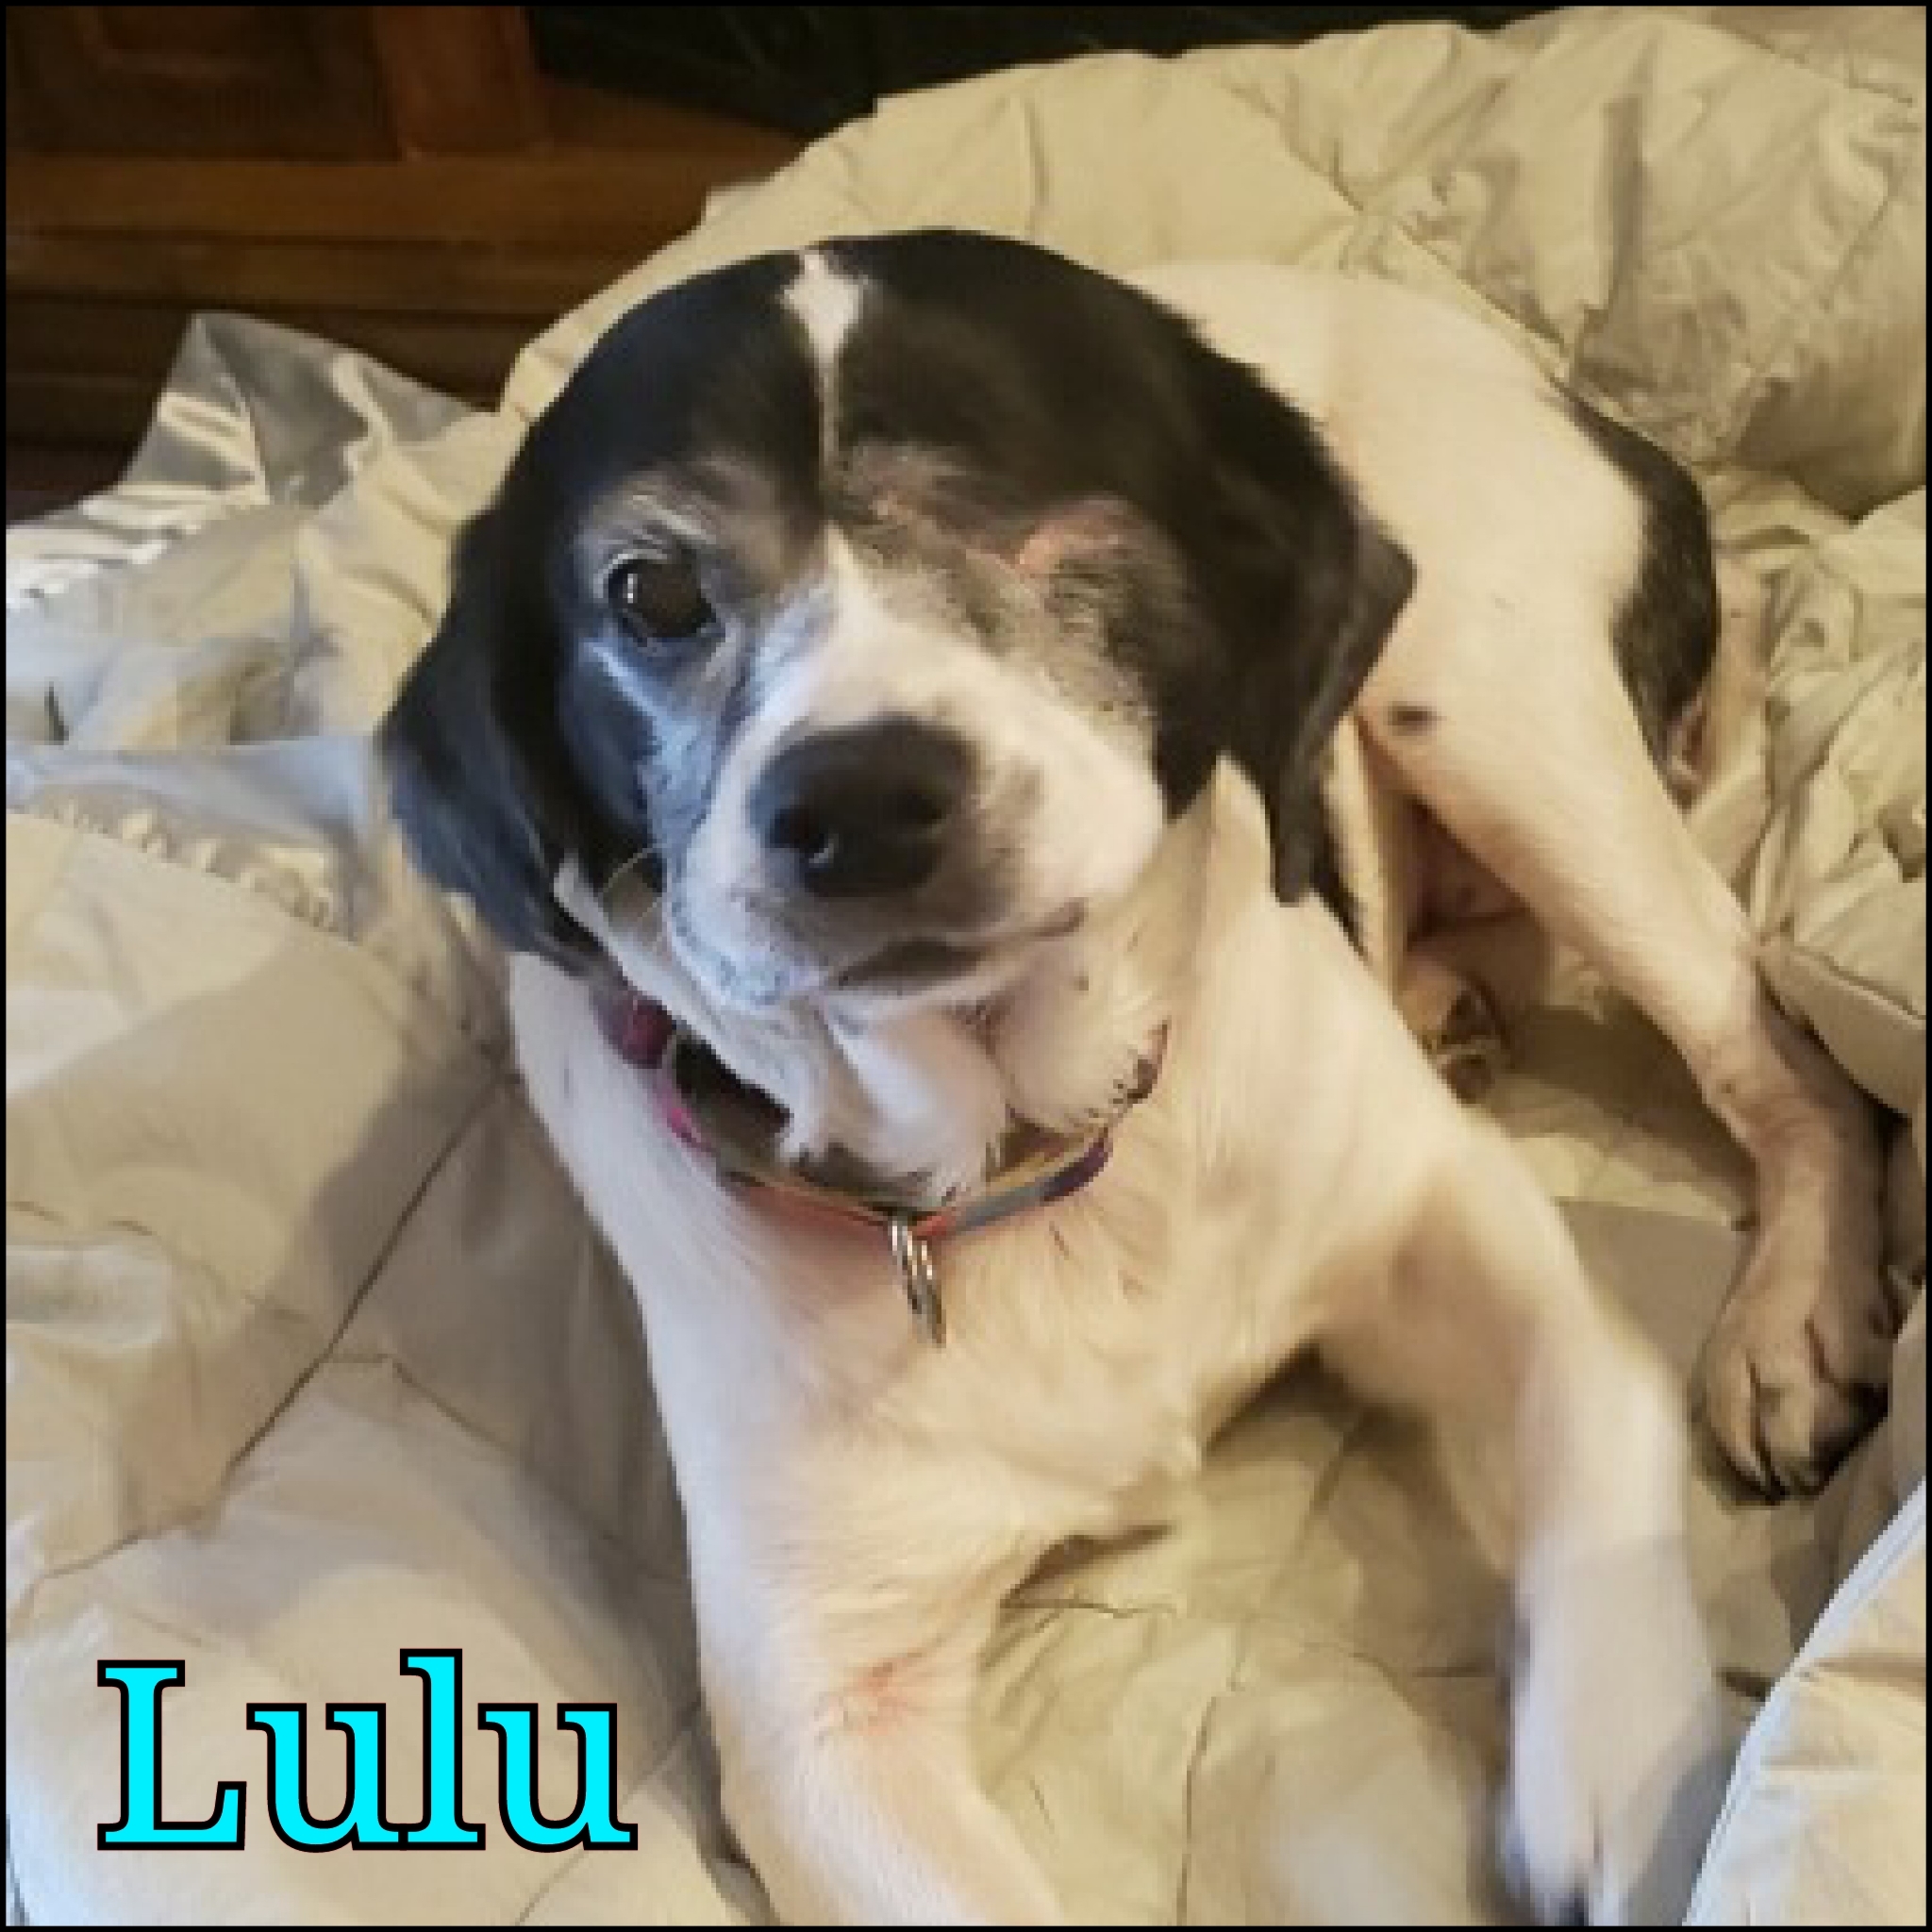 Lulu detail page